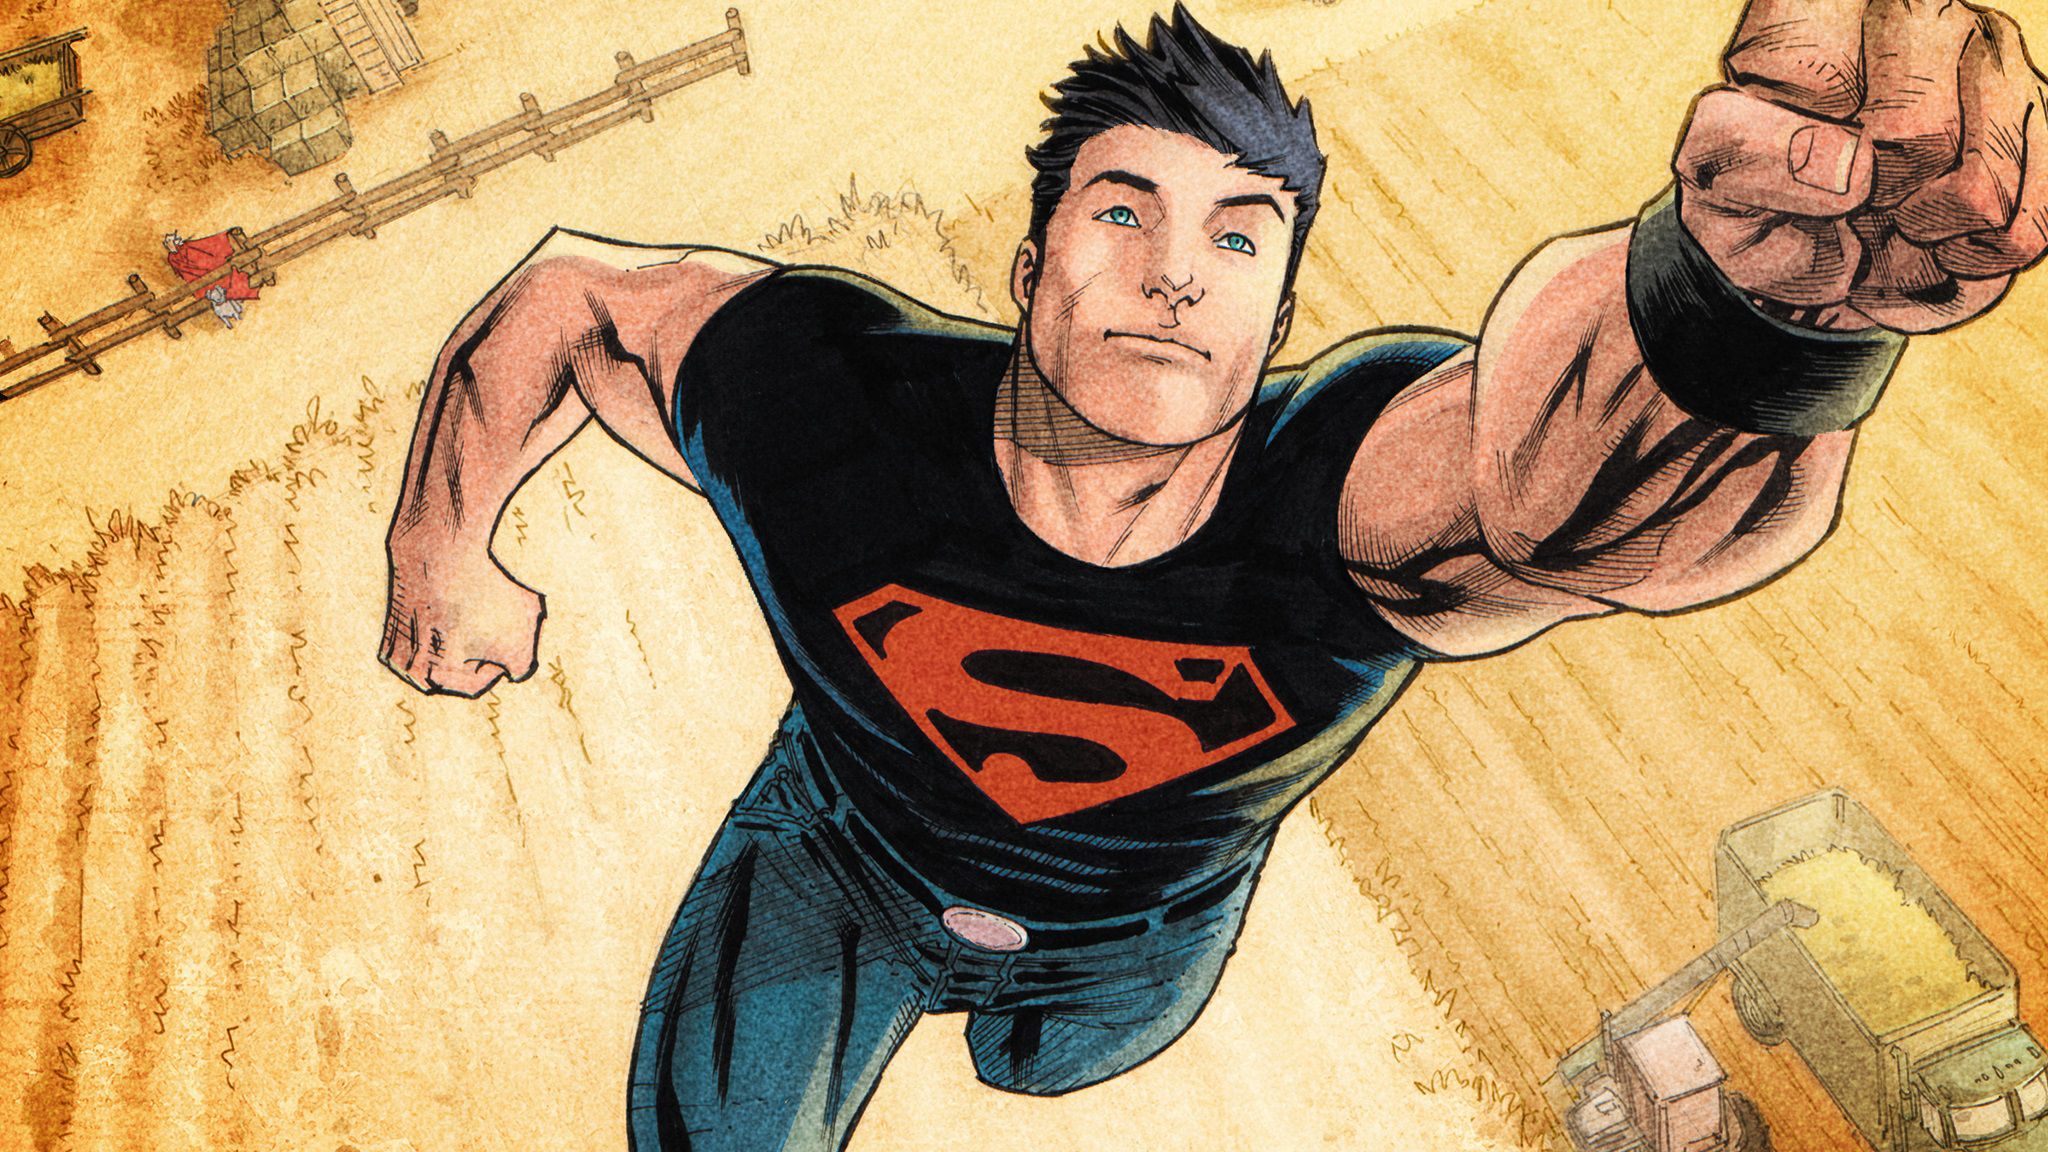 Exclusive: Superboy Live-Action Movie In Development